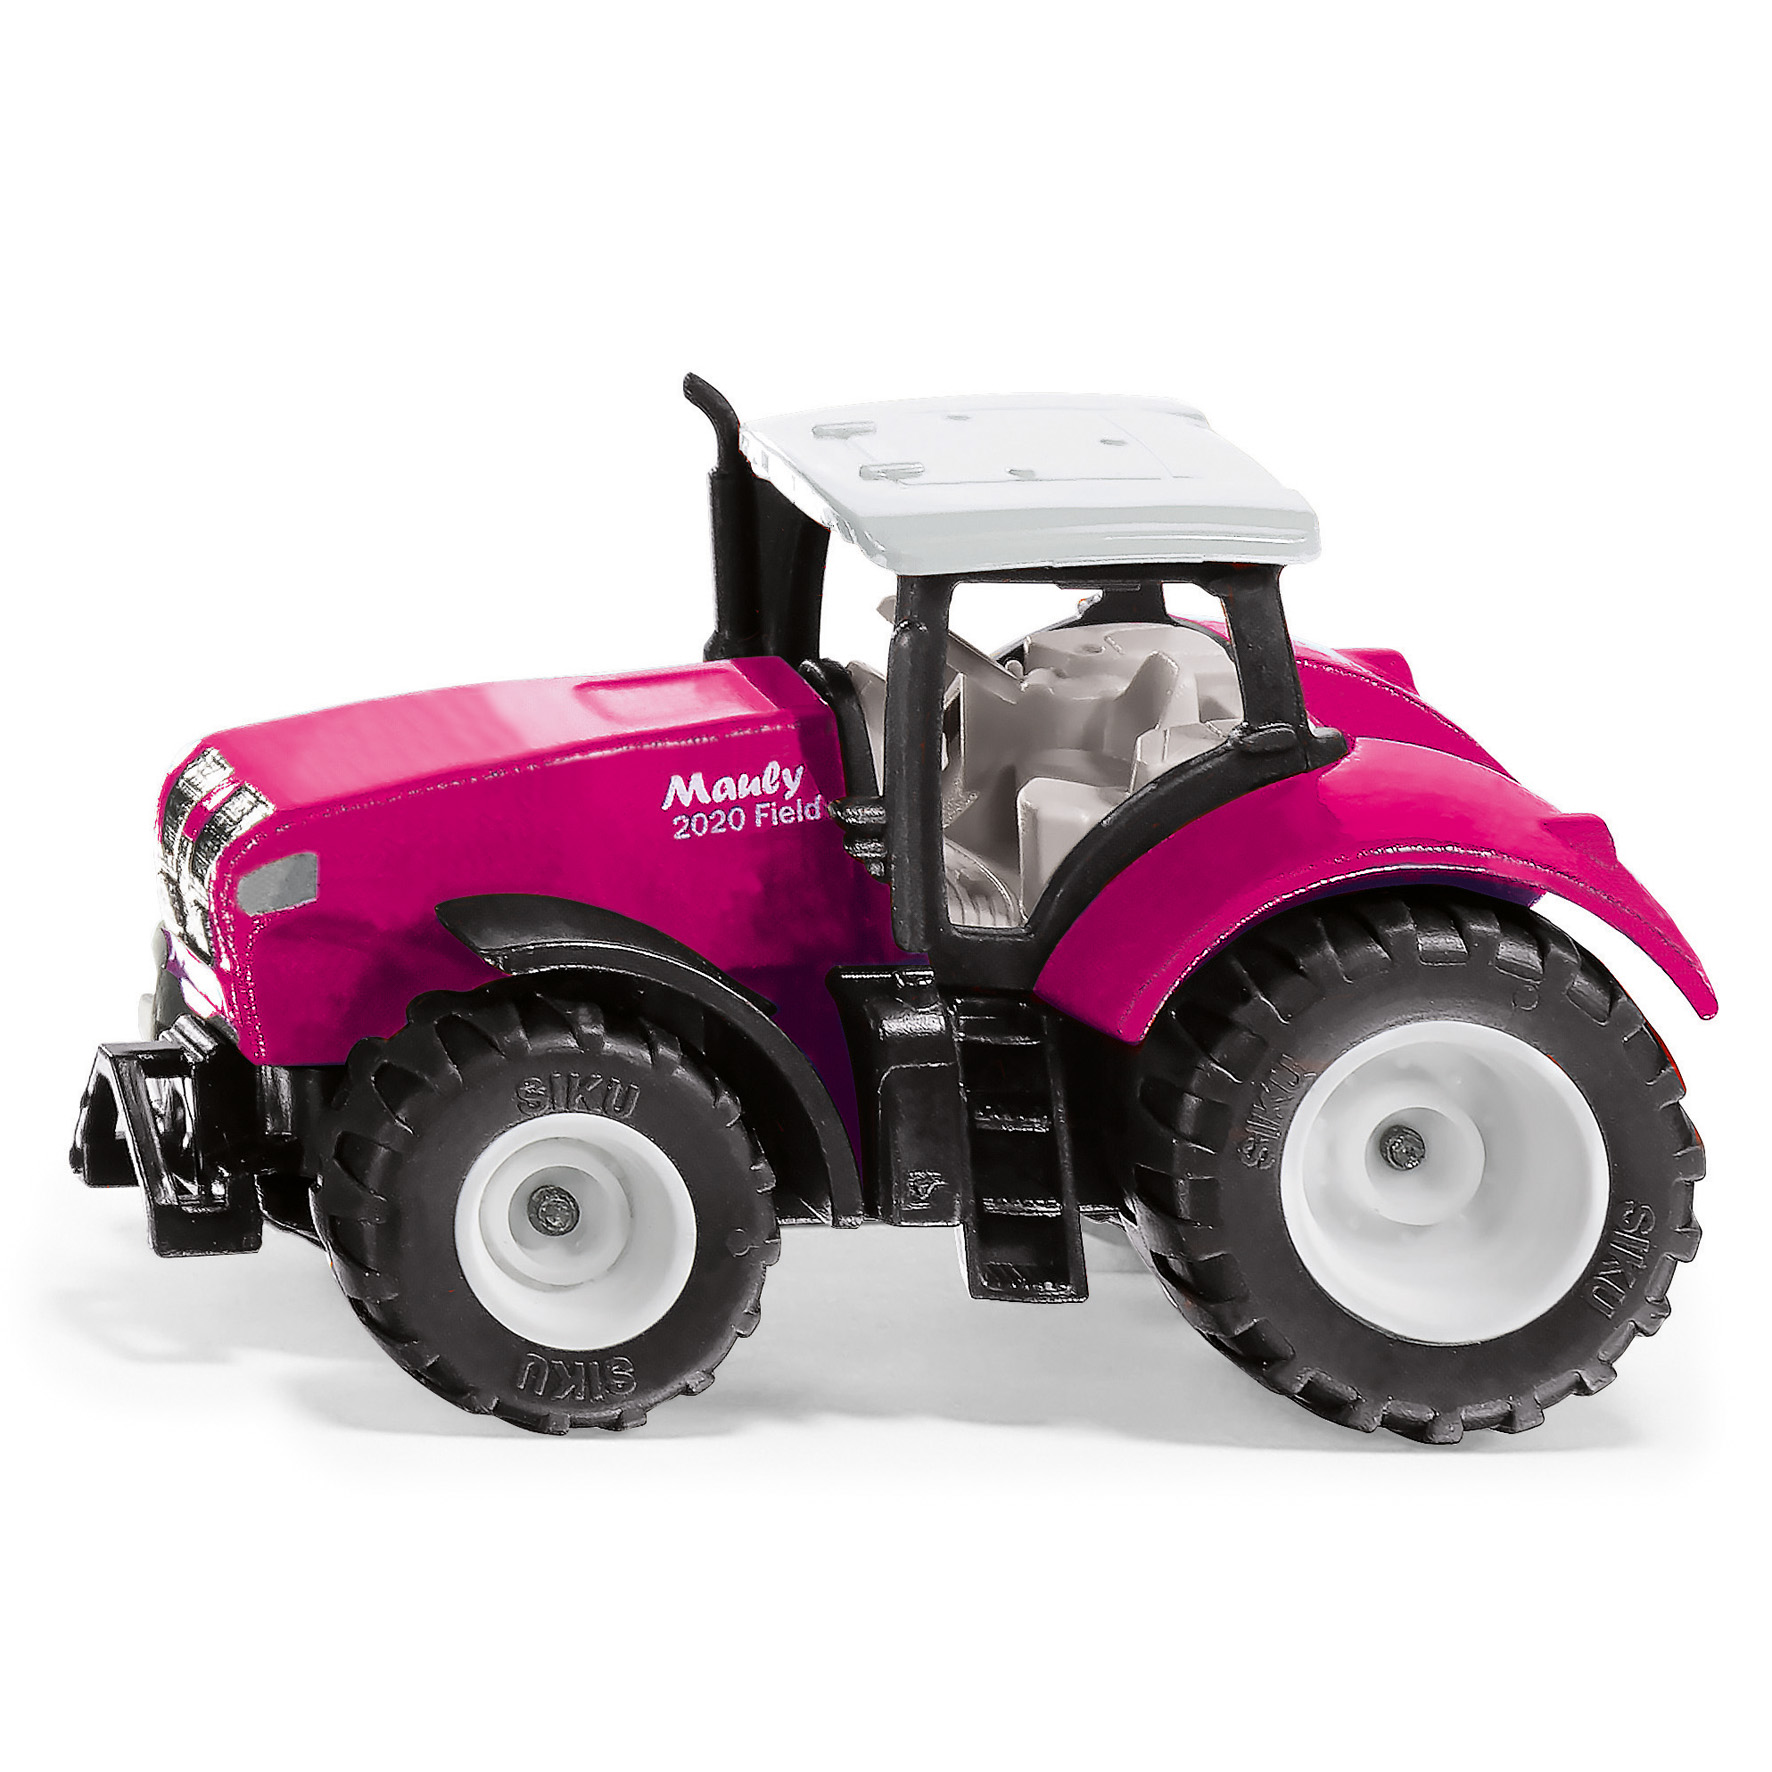 Traktorer & Lantbruksfordon mauly x540 tractor pink